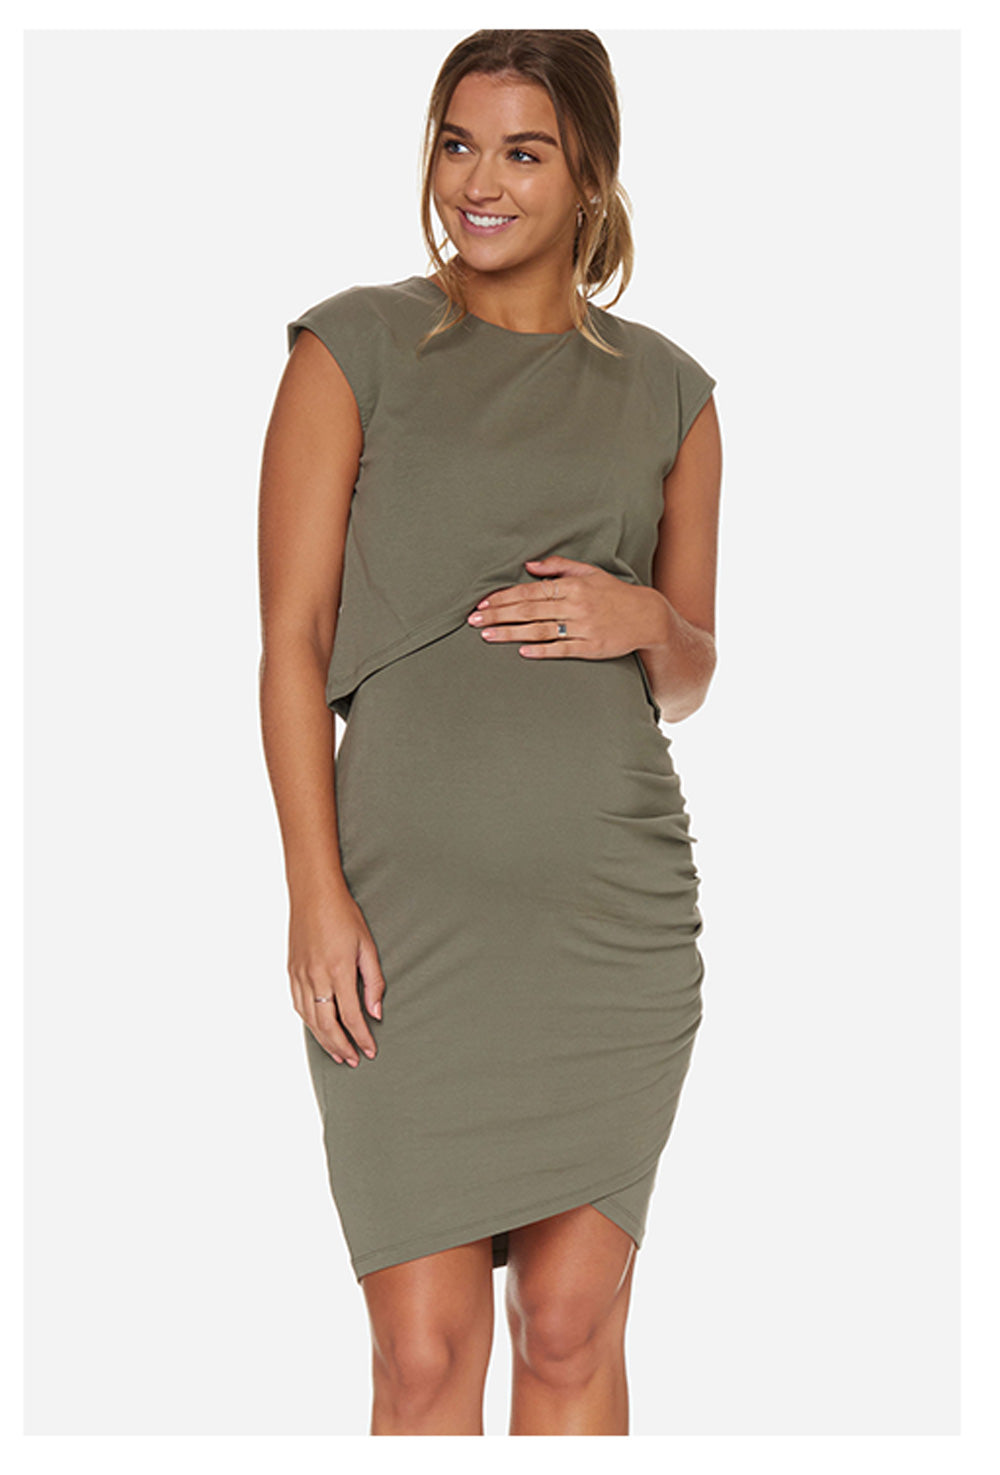 Khaki Maternity Dress